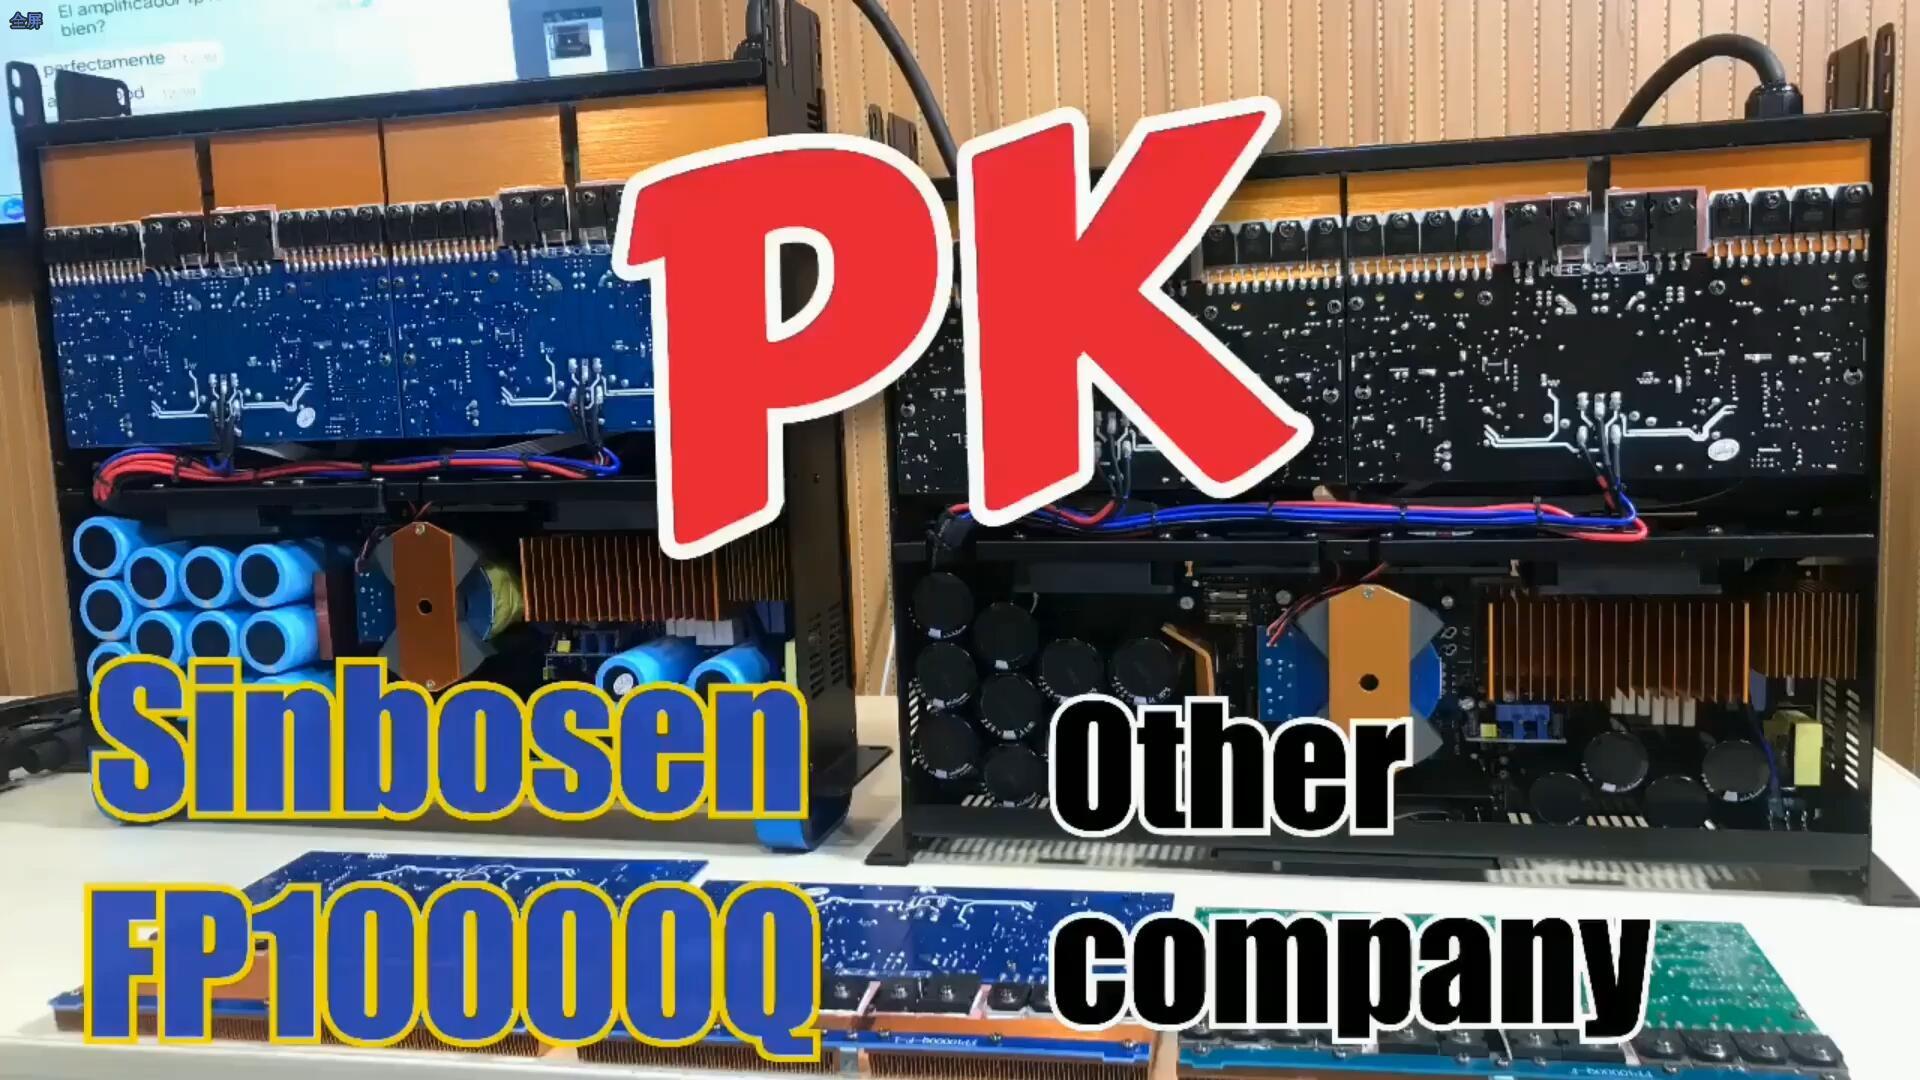 Sinbosen FP10000Q PK diğer şirket